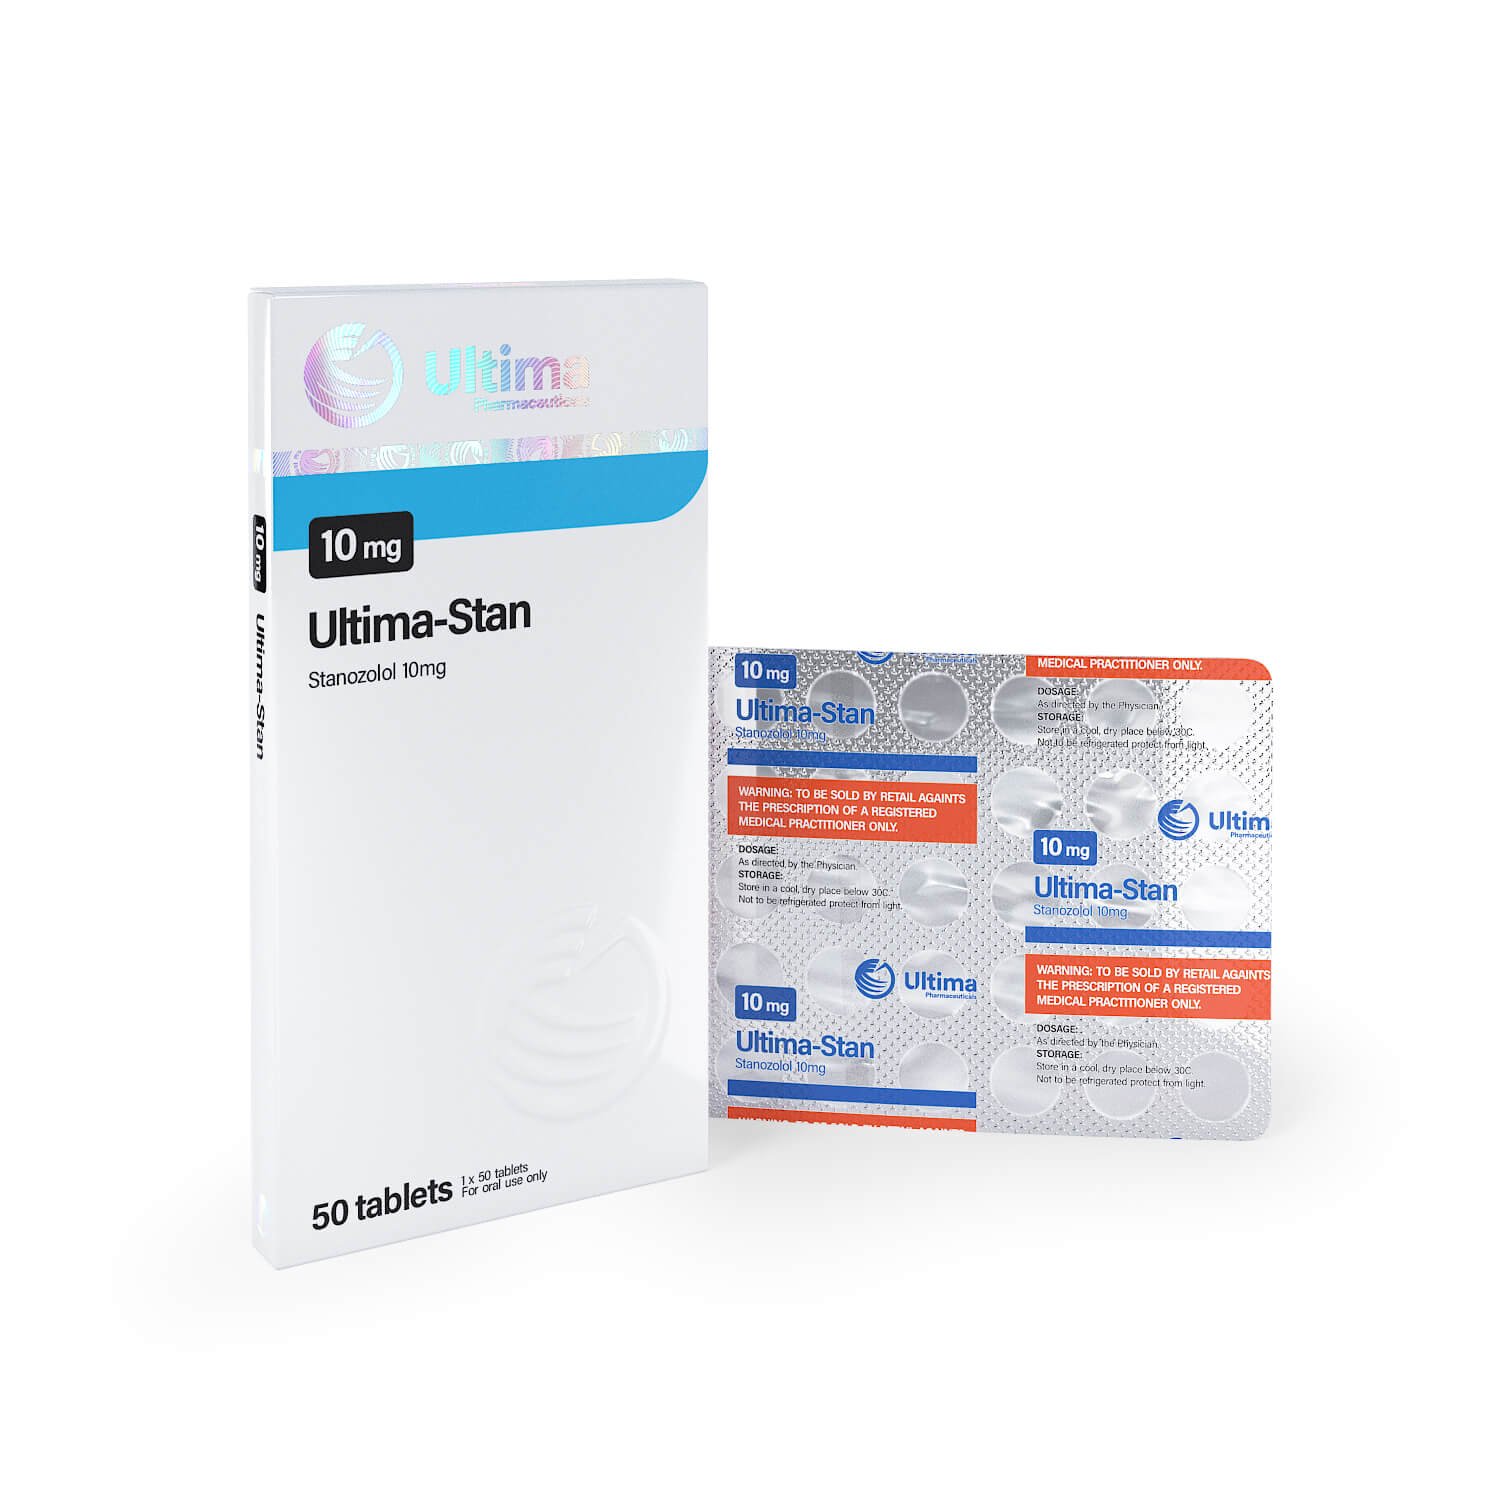 ultima-stan-10-50-pills-x-10-mg